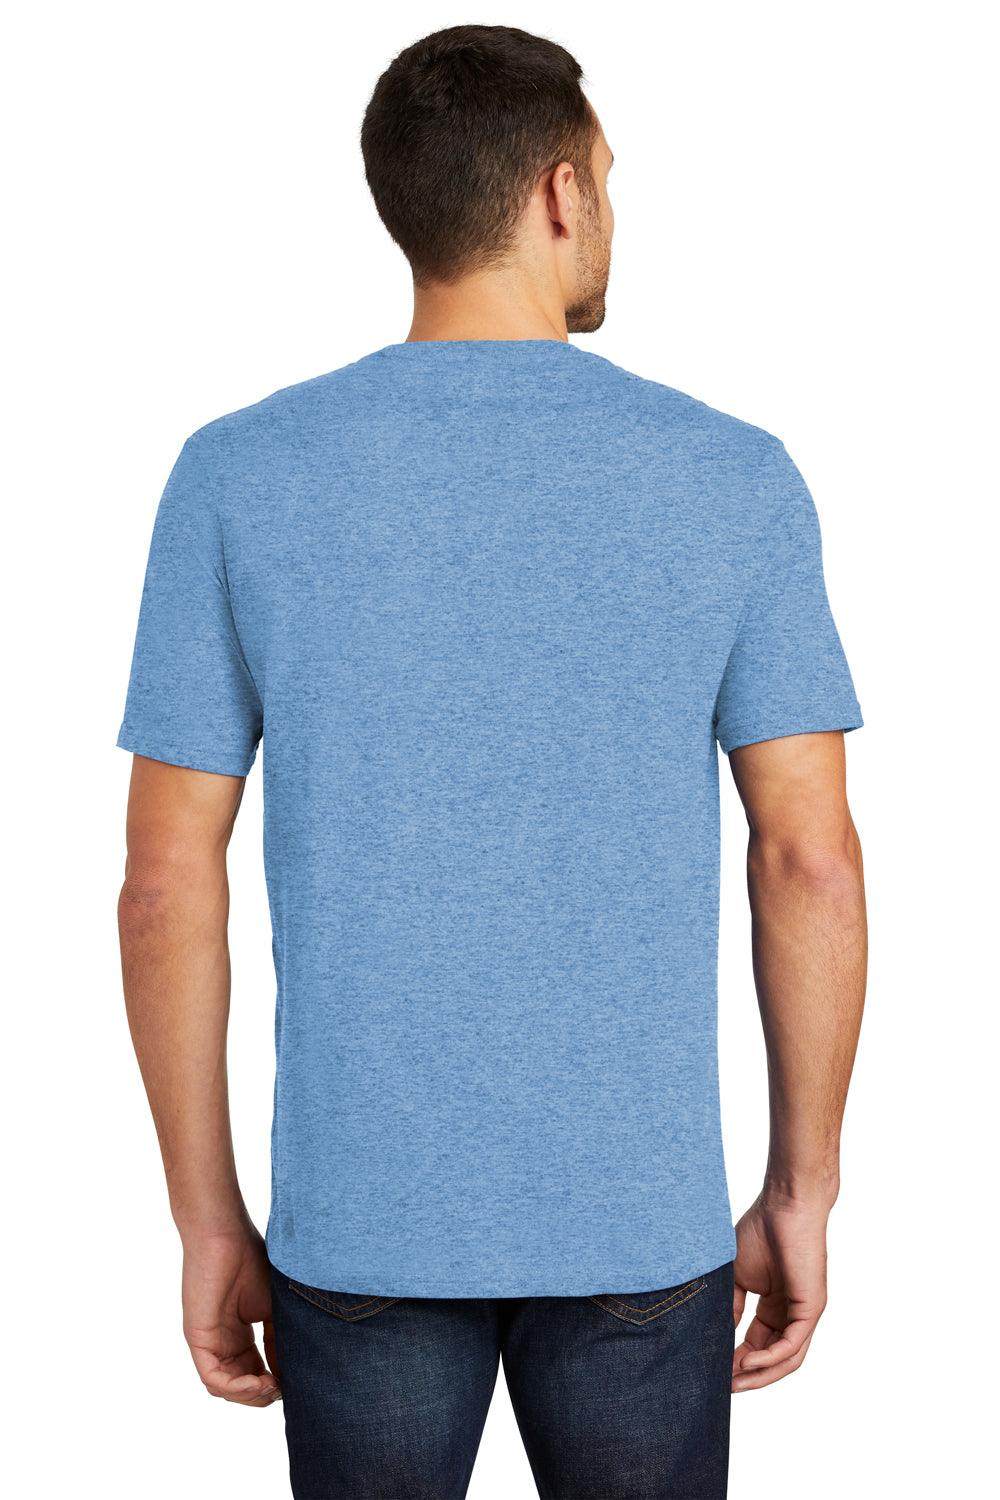 District DT104 Mens Perfect Weight Short Sleeve Crewneck T-Shirt Denim Blue Back